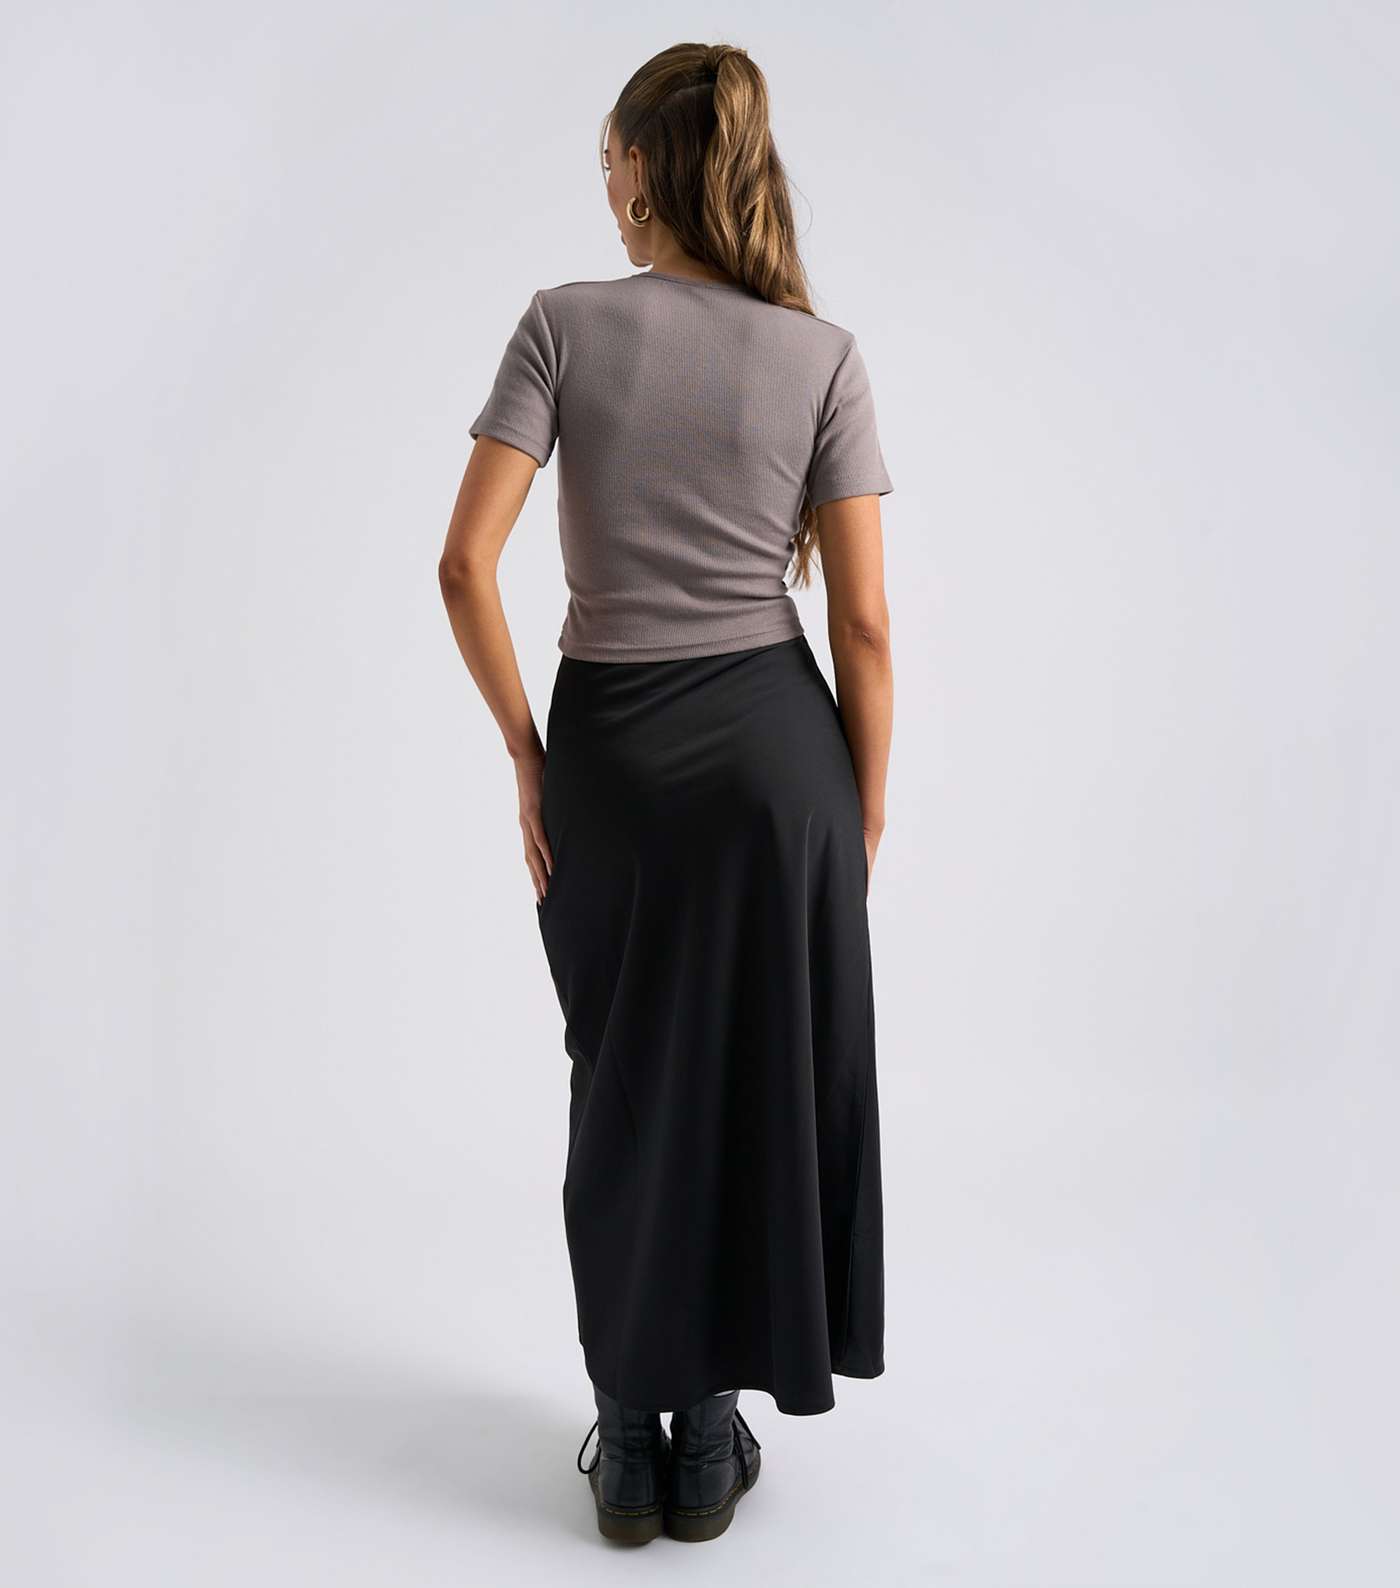 Urban Bliss Black Satin Maxi Skirt Image 3